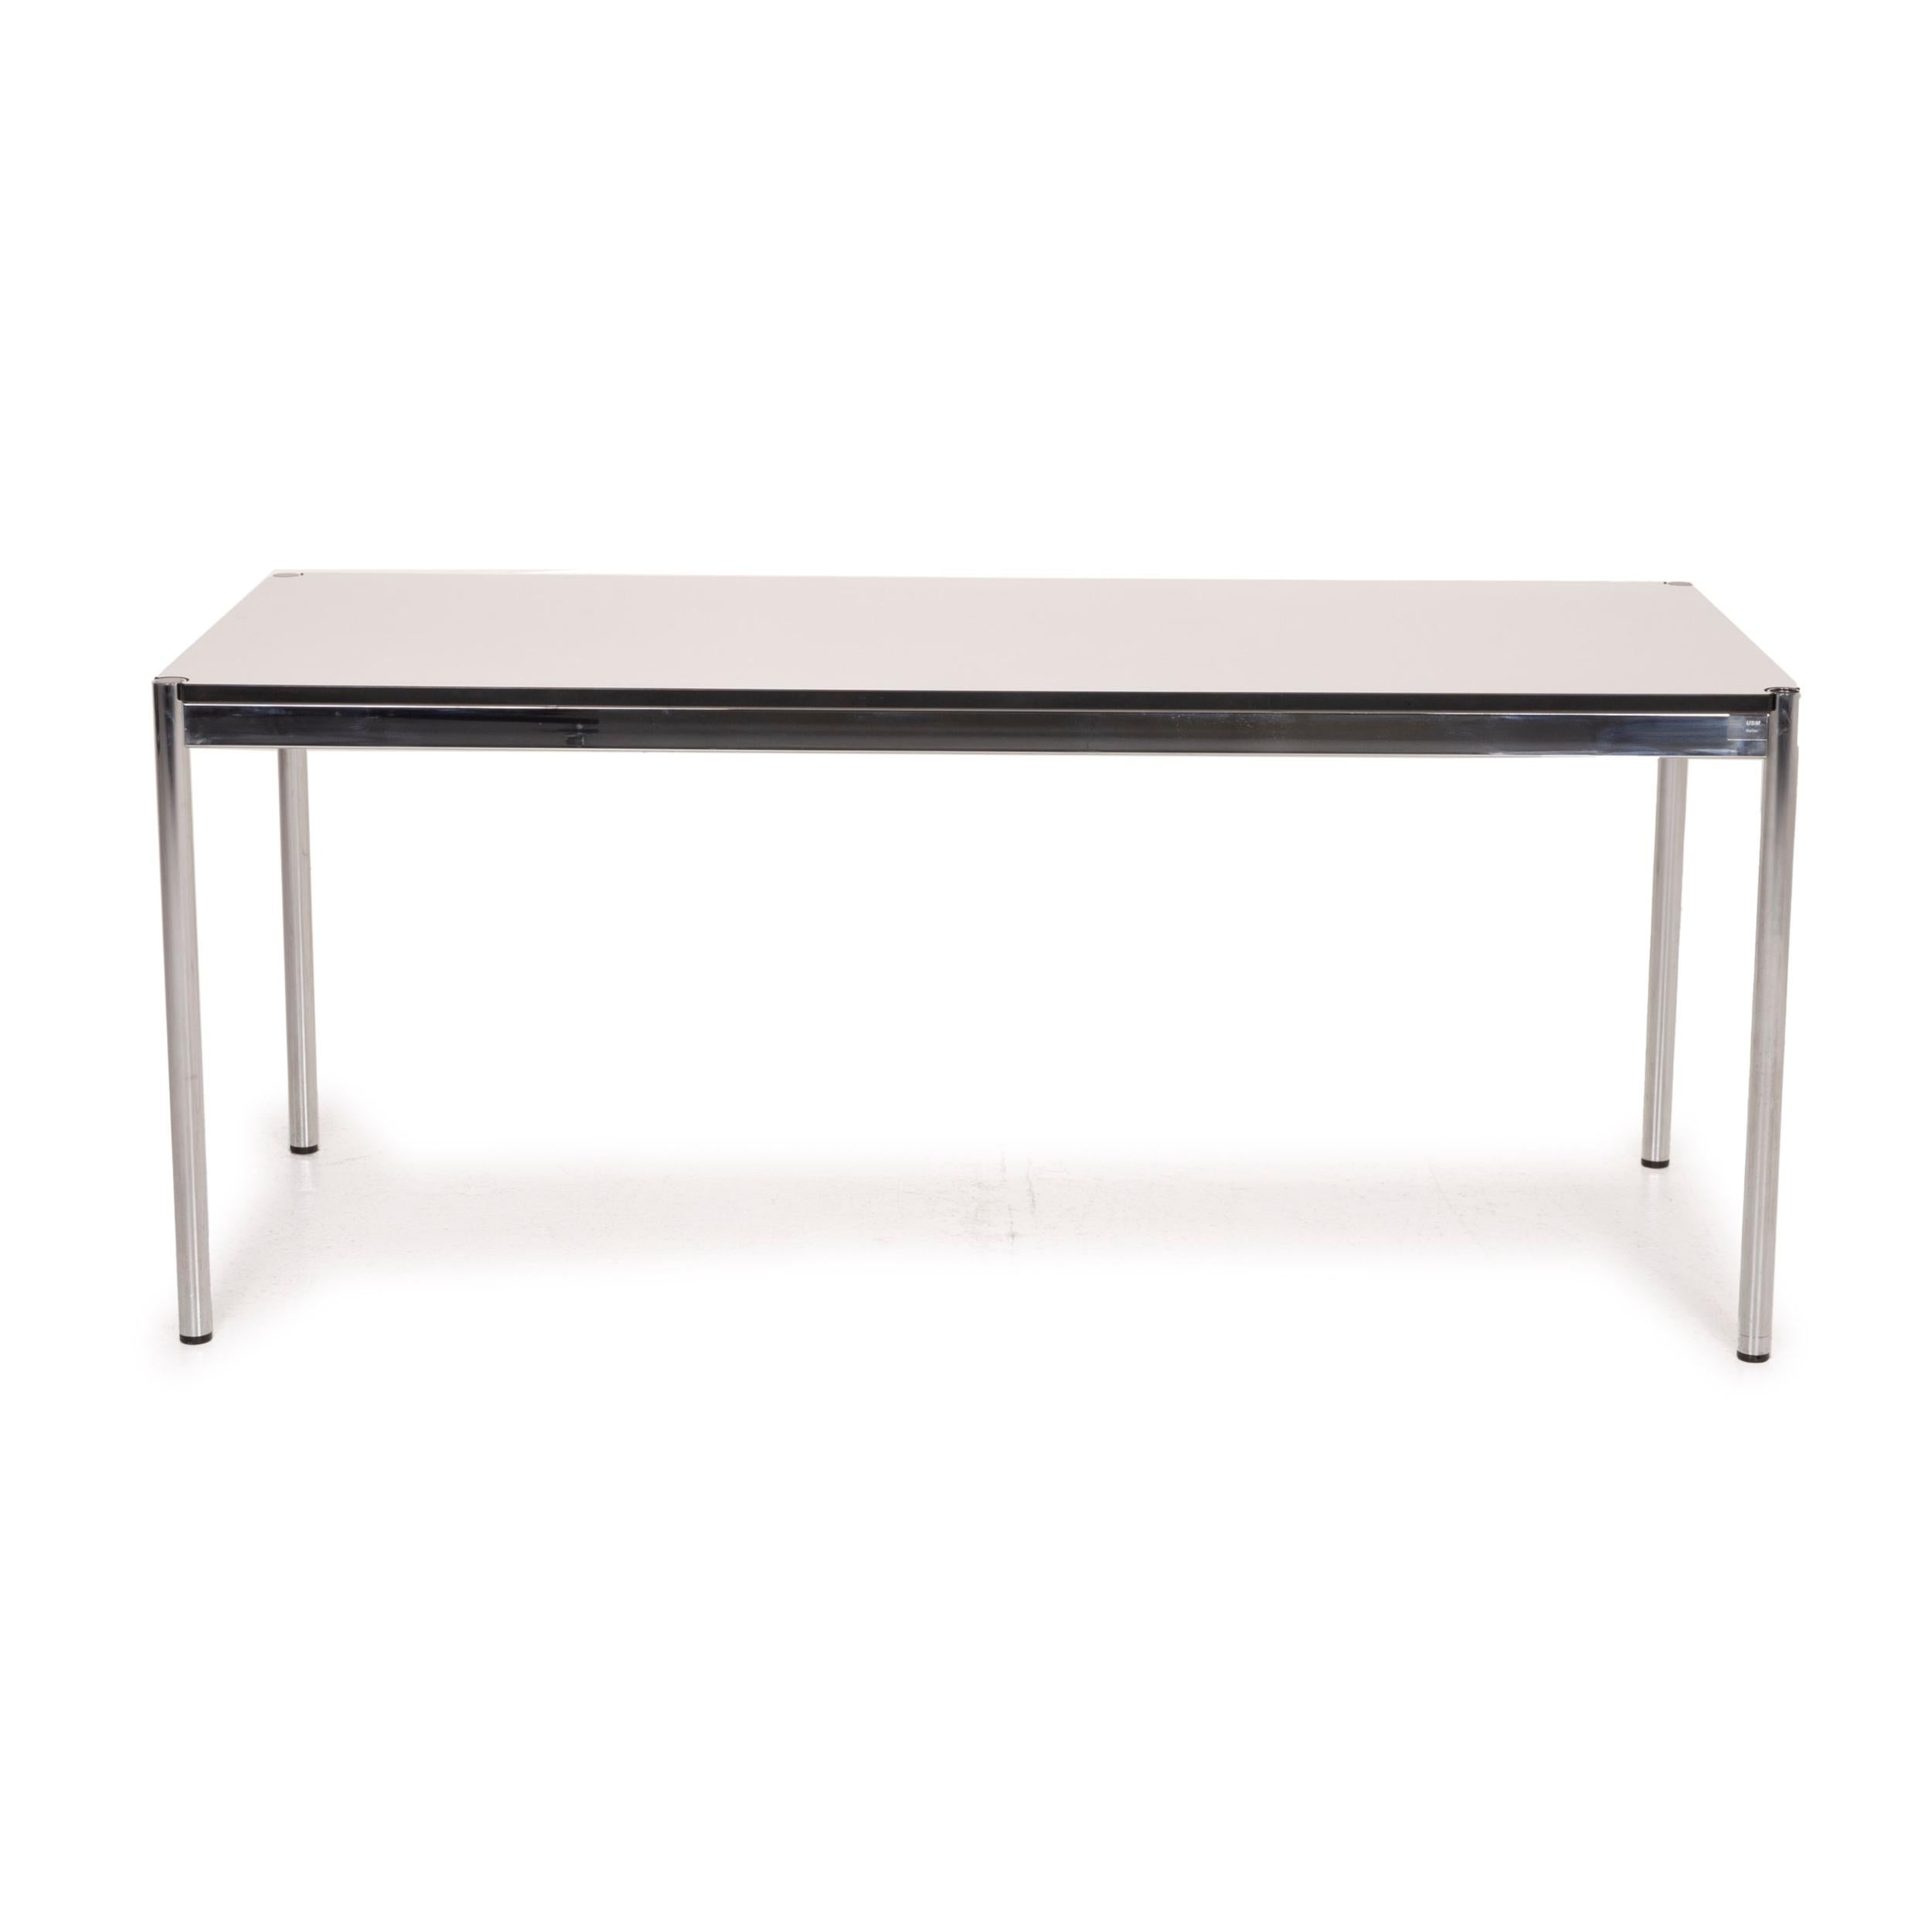 USM Haller Metal Table White Desk Chrome For Sale 3